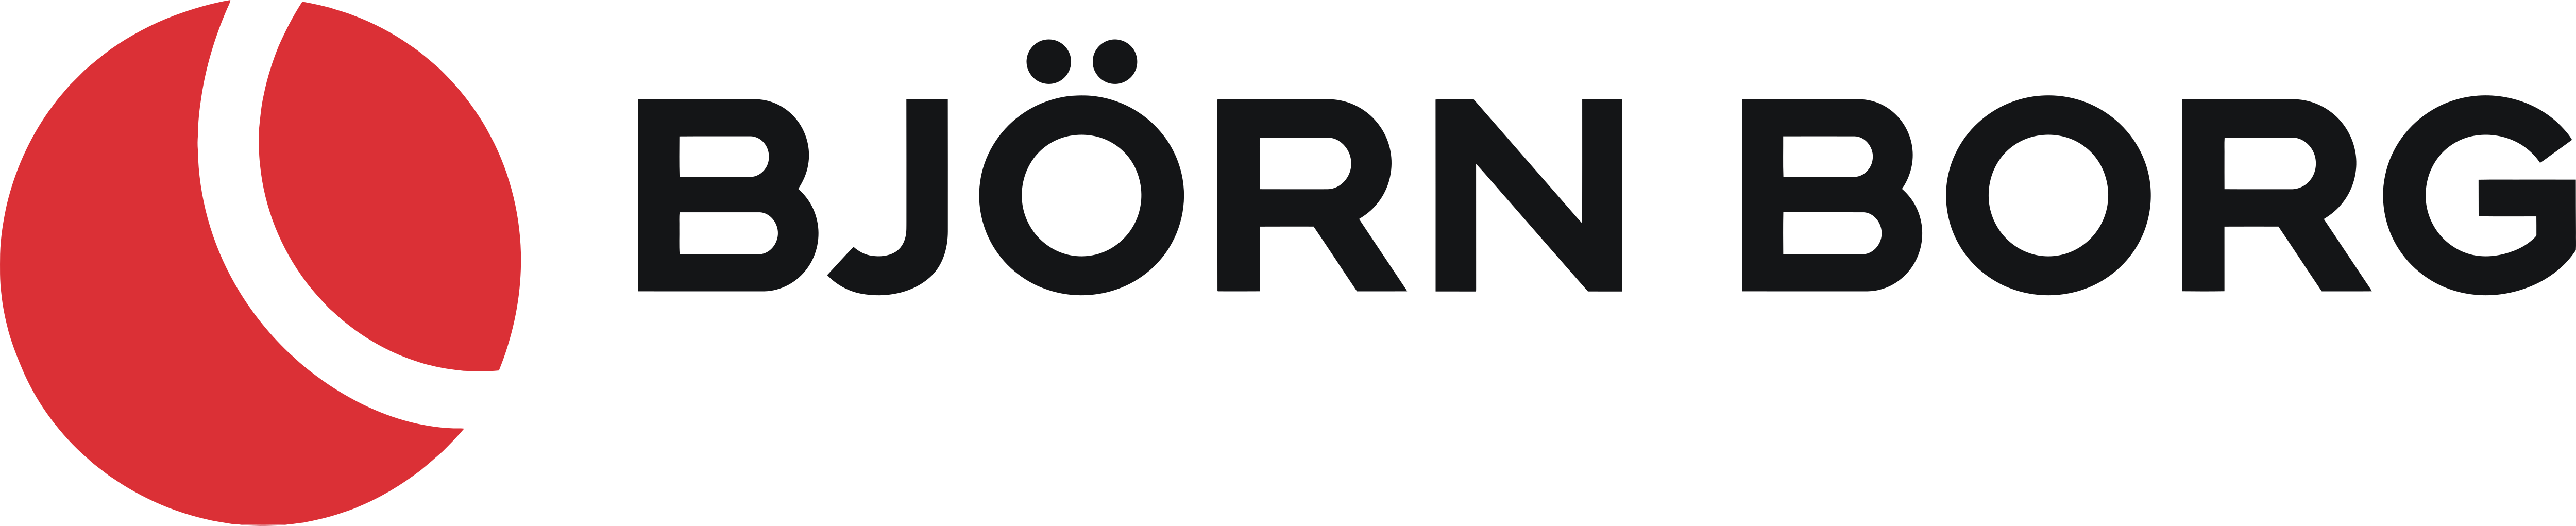 Consequent Manieren Ciro Björn Borg – Logos Download